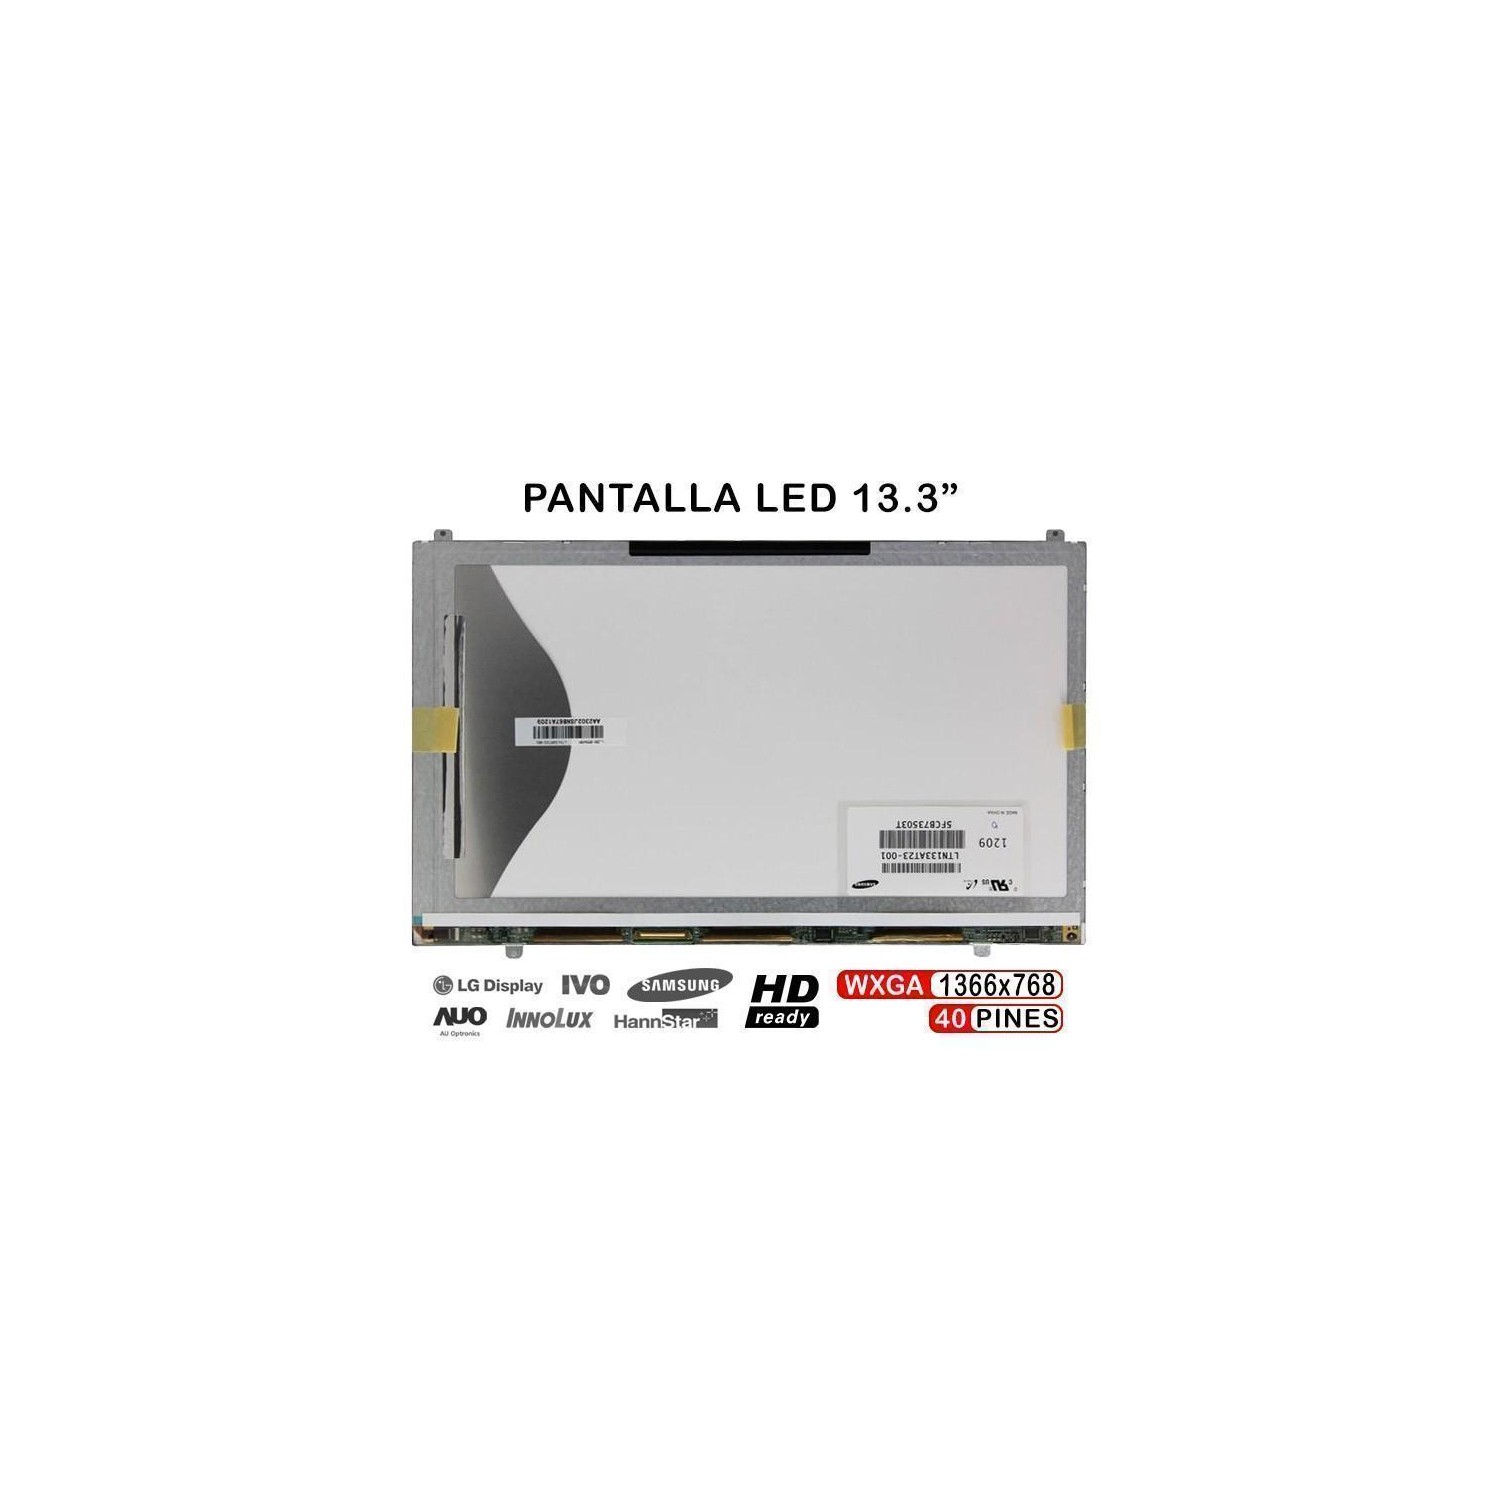 PANTALLA LED SAMSUNG DE 13.3" PARA PORTÁTIL LTN133AT23-001